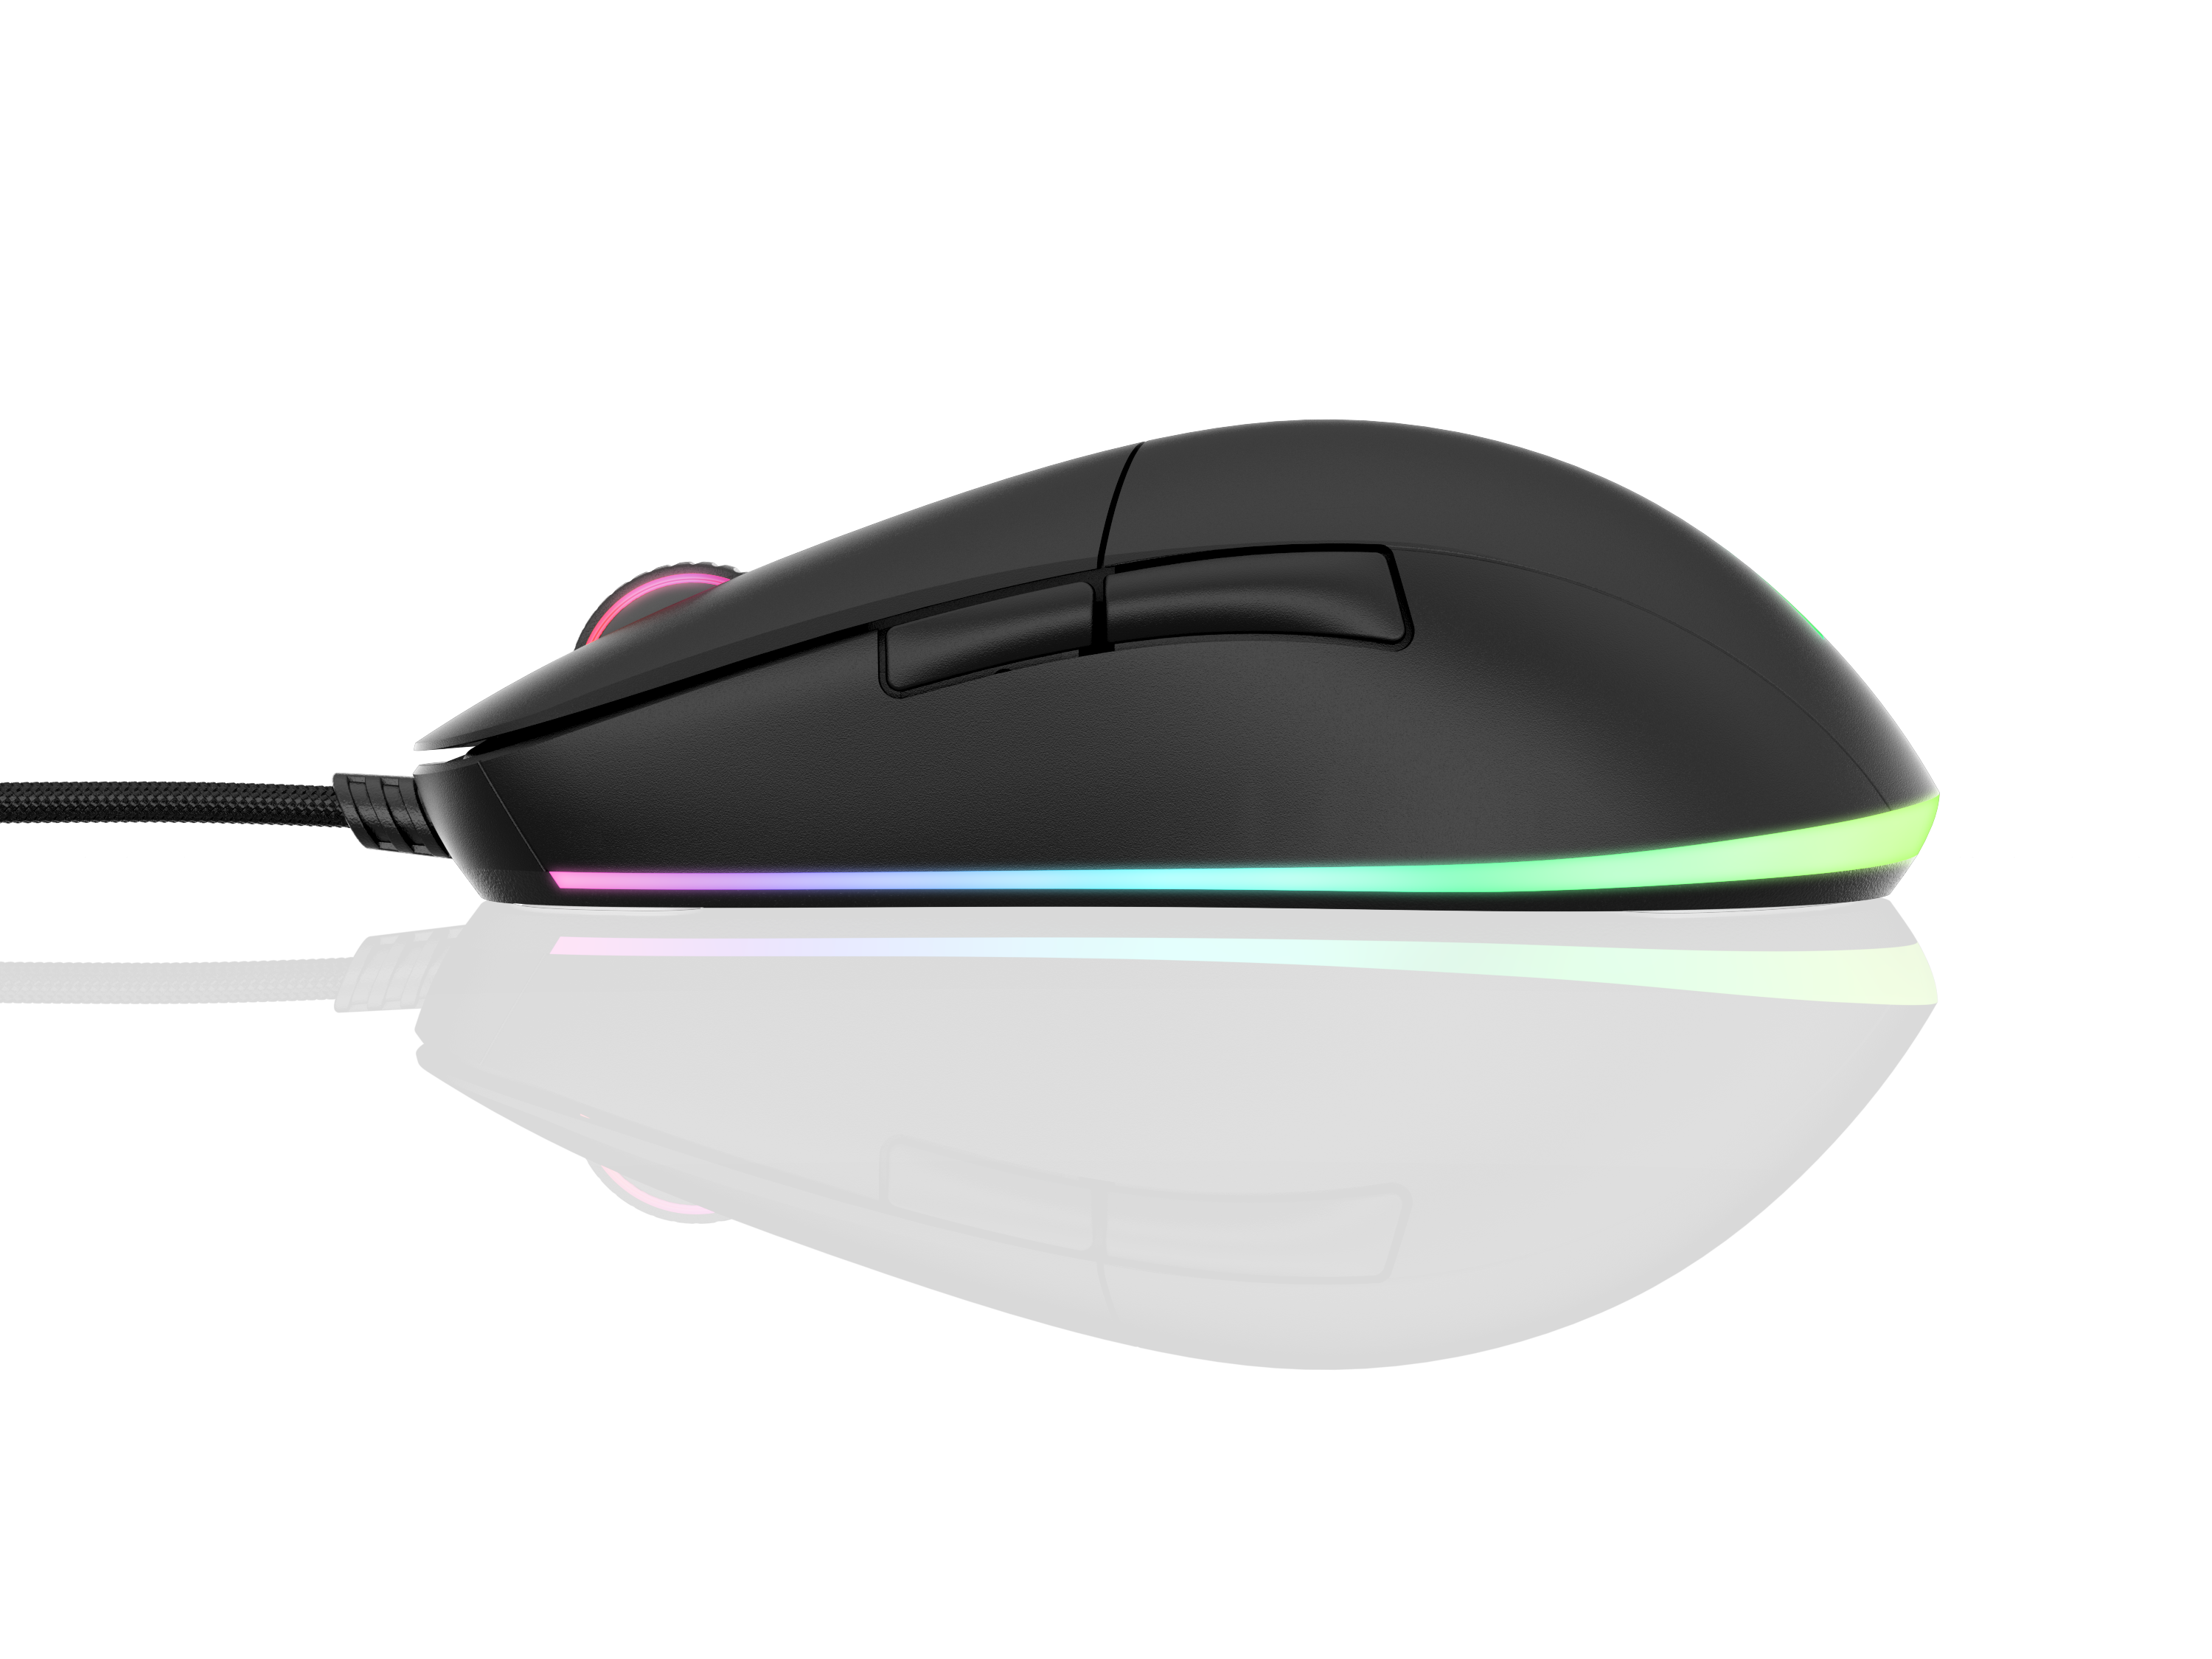 XM1 RGB Gaming Mouse - Black